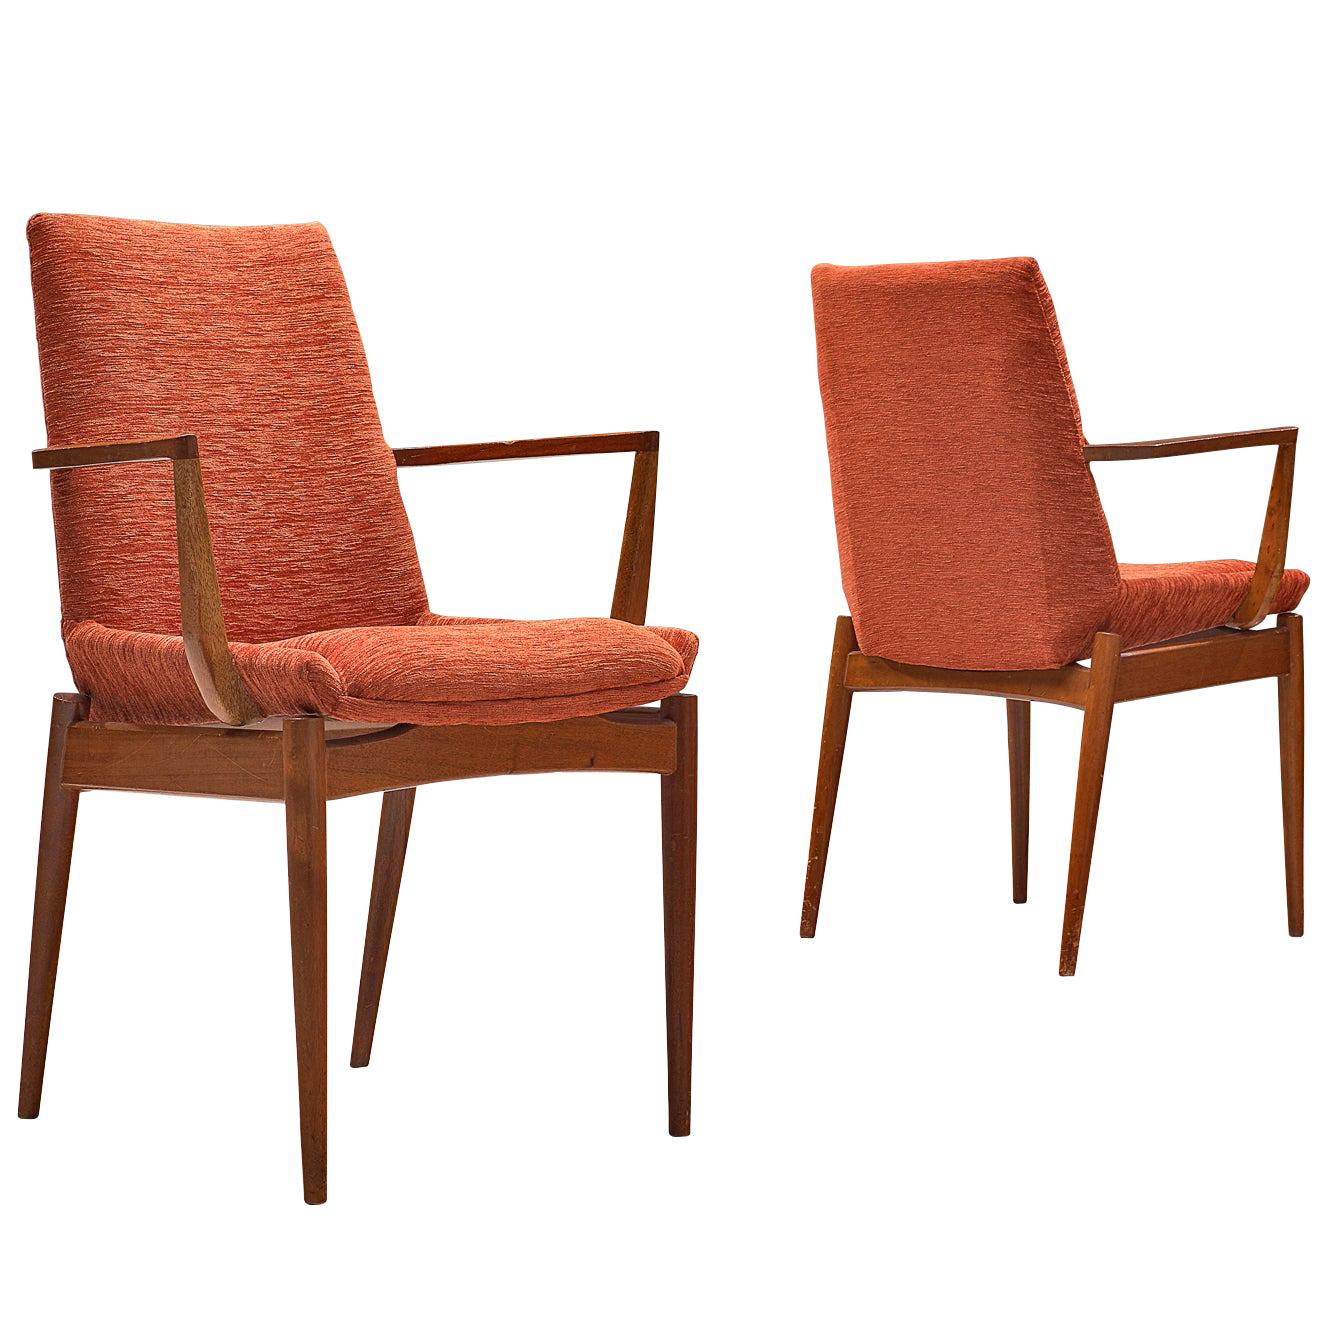 Scandinavian Armchairs in Teak and Red/Orange Cord Upholstery